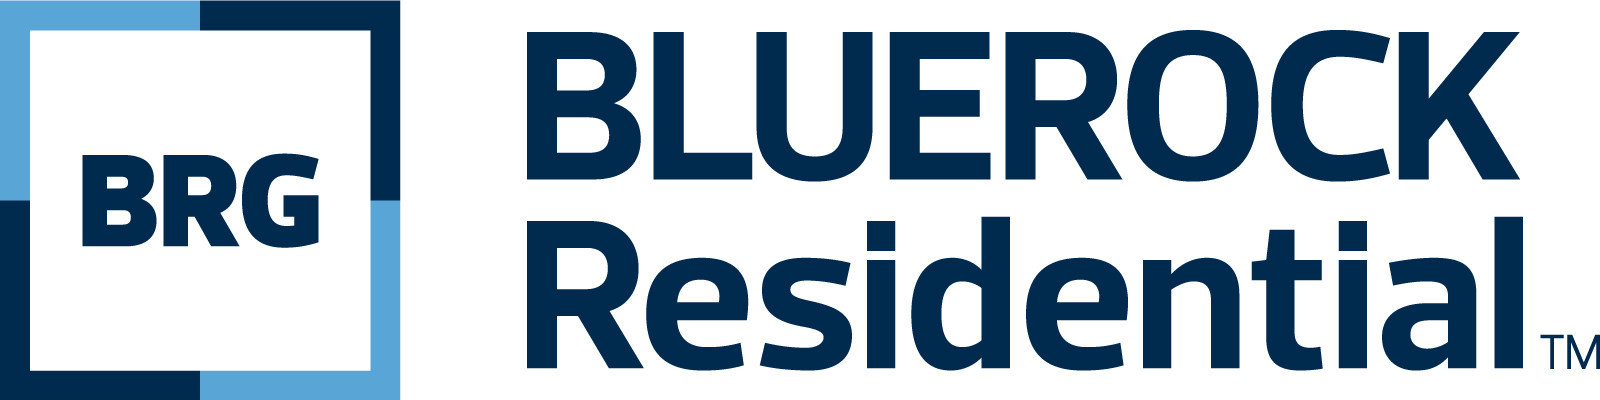 Bluerock Residential Growth REIT Inc